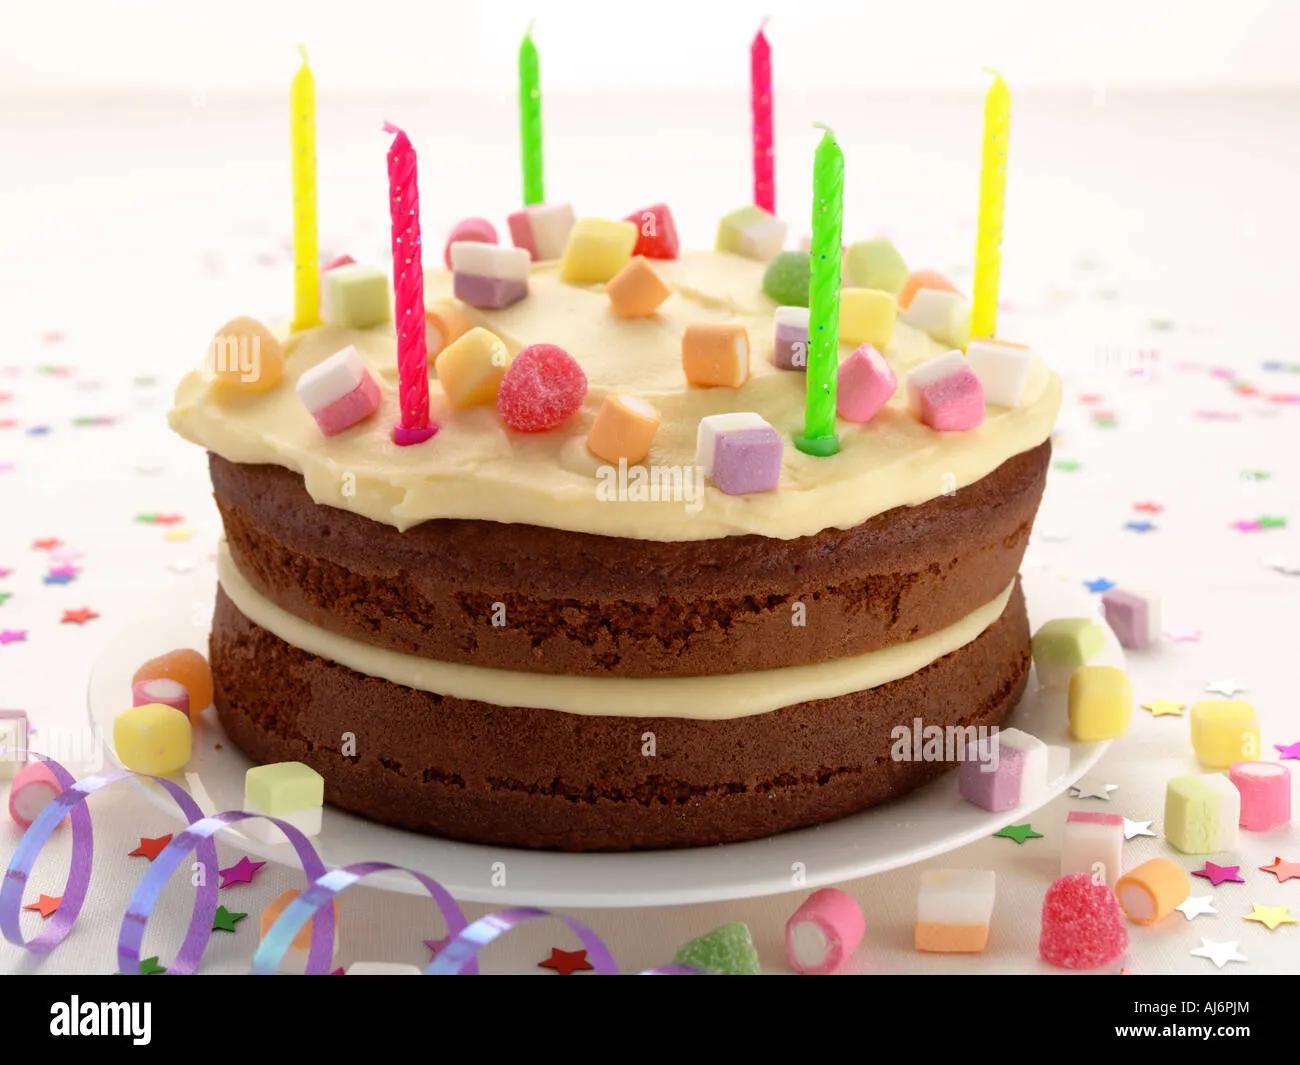 Kinder Geburtstagstorte mit Kerzen Stockfotografie - Alamy